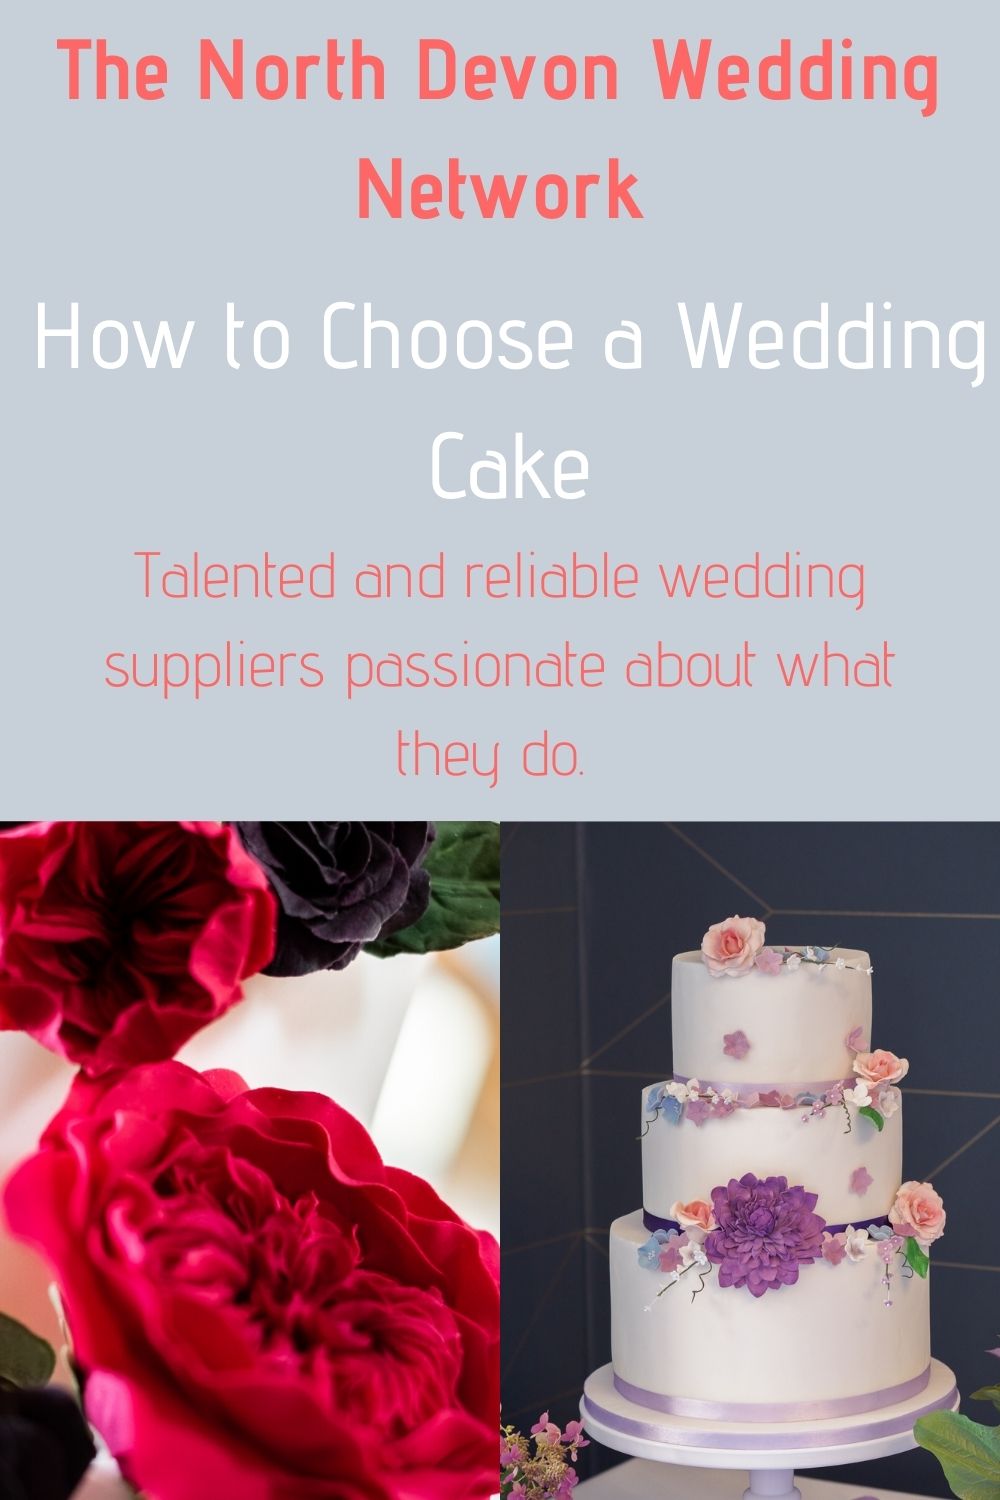 North Devon wedding network; How to choose a wedding cake